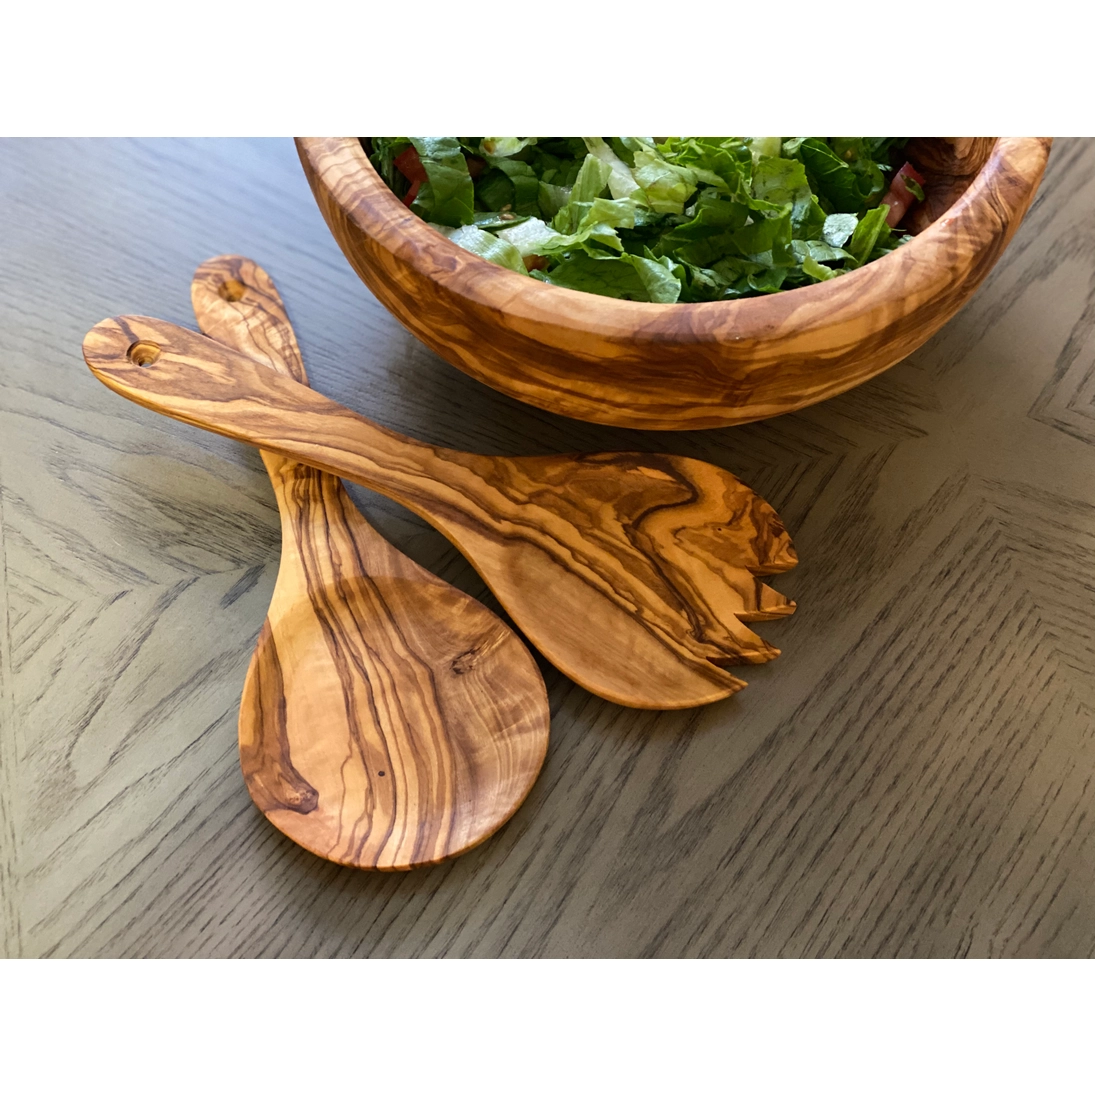 Spoons - Wood or Stainless Steel?